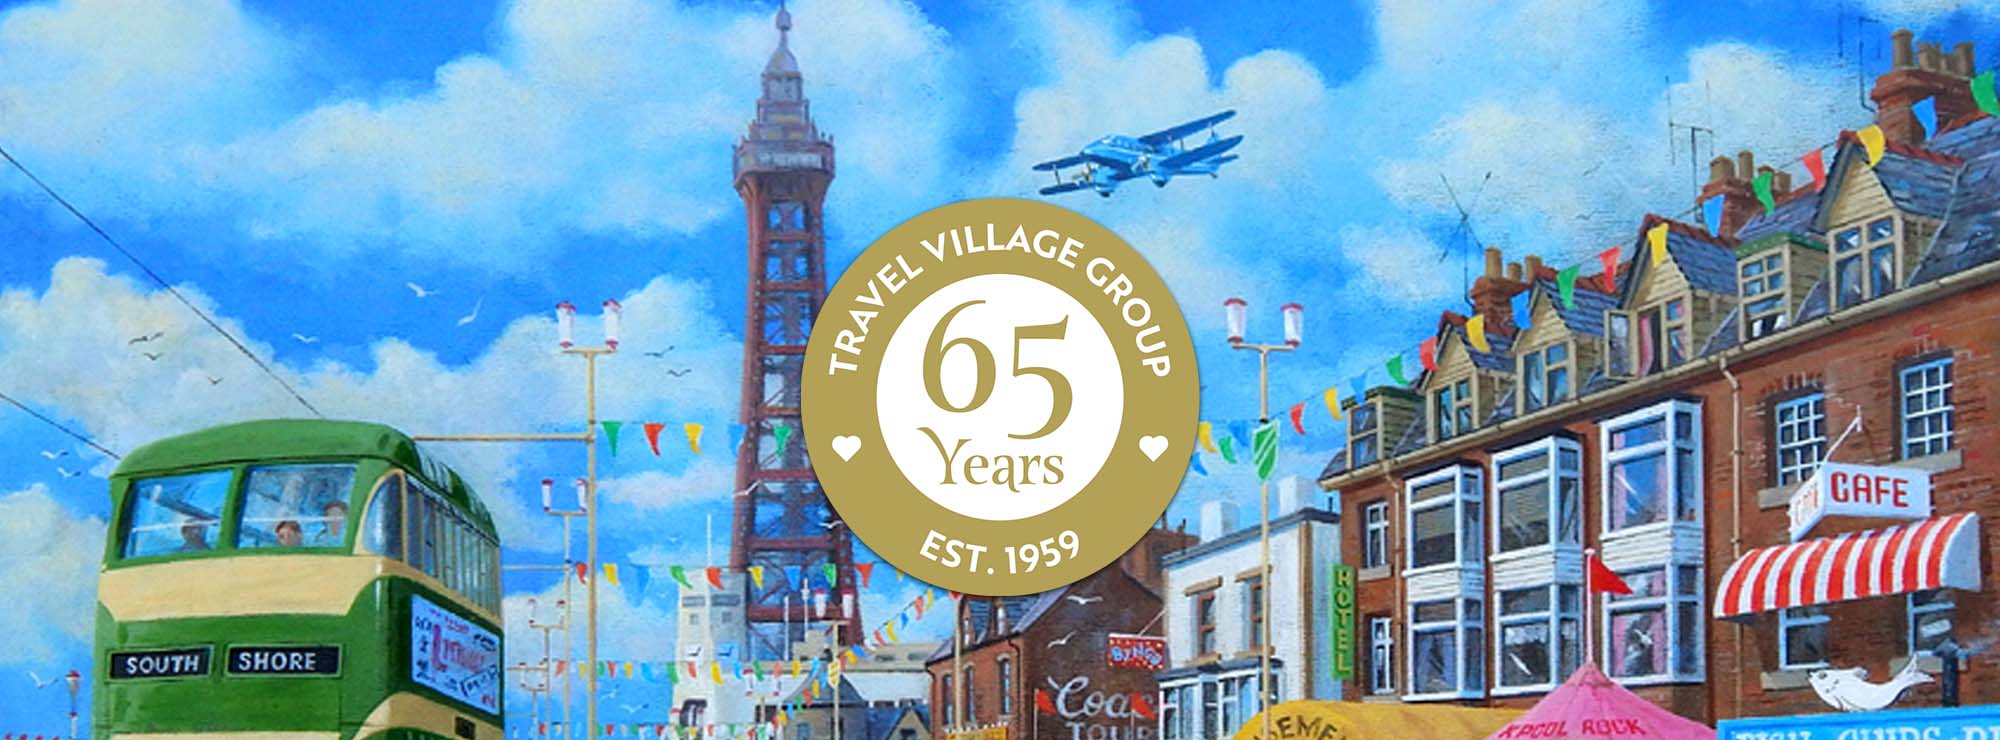 Travel Village Group Celebrate 65 years